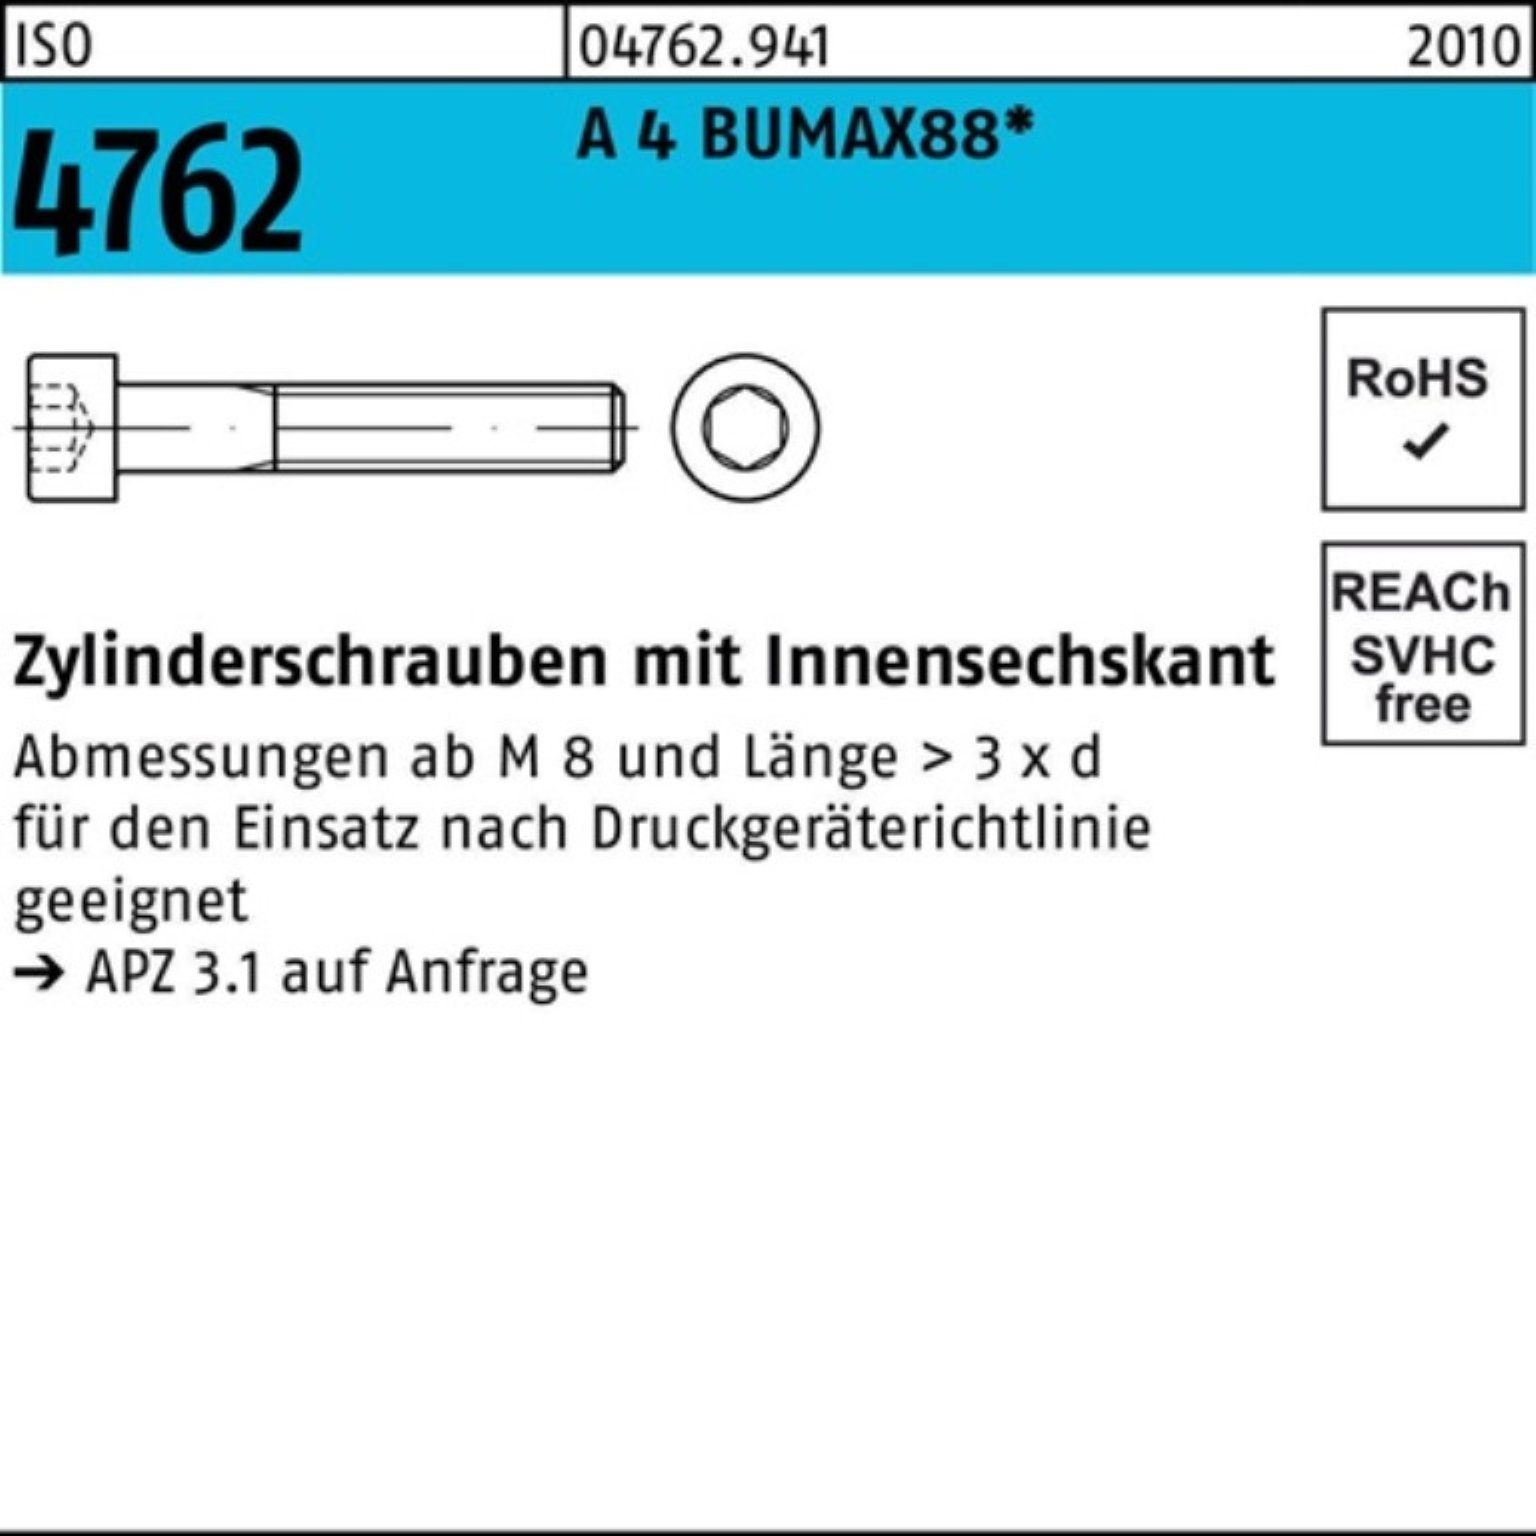 ISO Zylinderschraube Zylinderschraube 100er M6x 30 100 Innen-6kt BUMAX88 4 Bufab 4762 Pack A